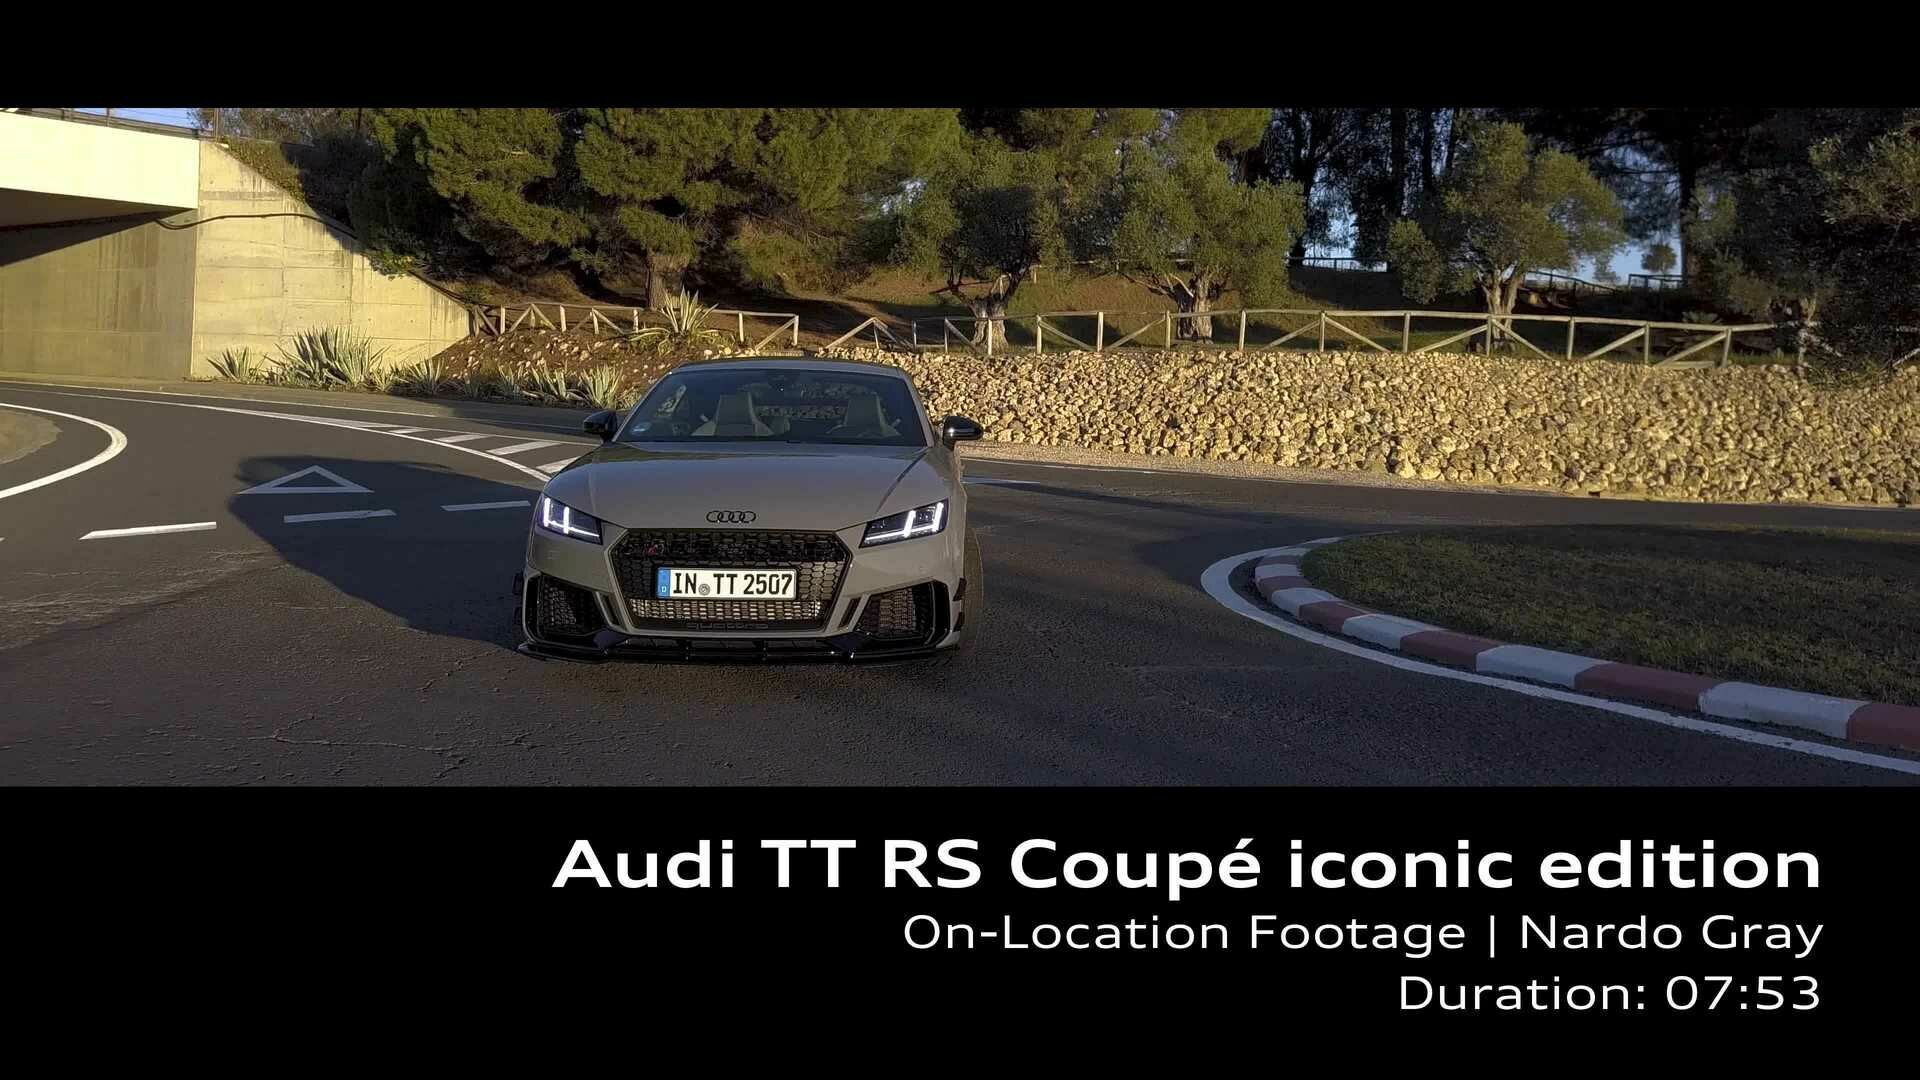 Footage: Audi TT RS Coupé iconic edition